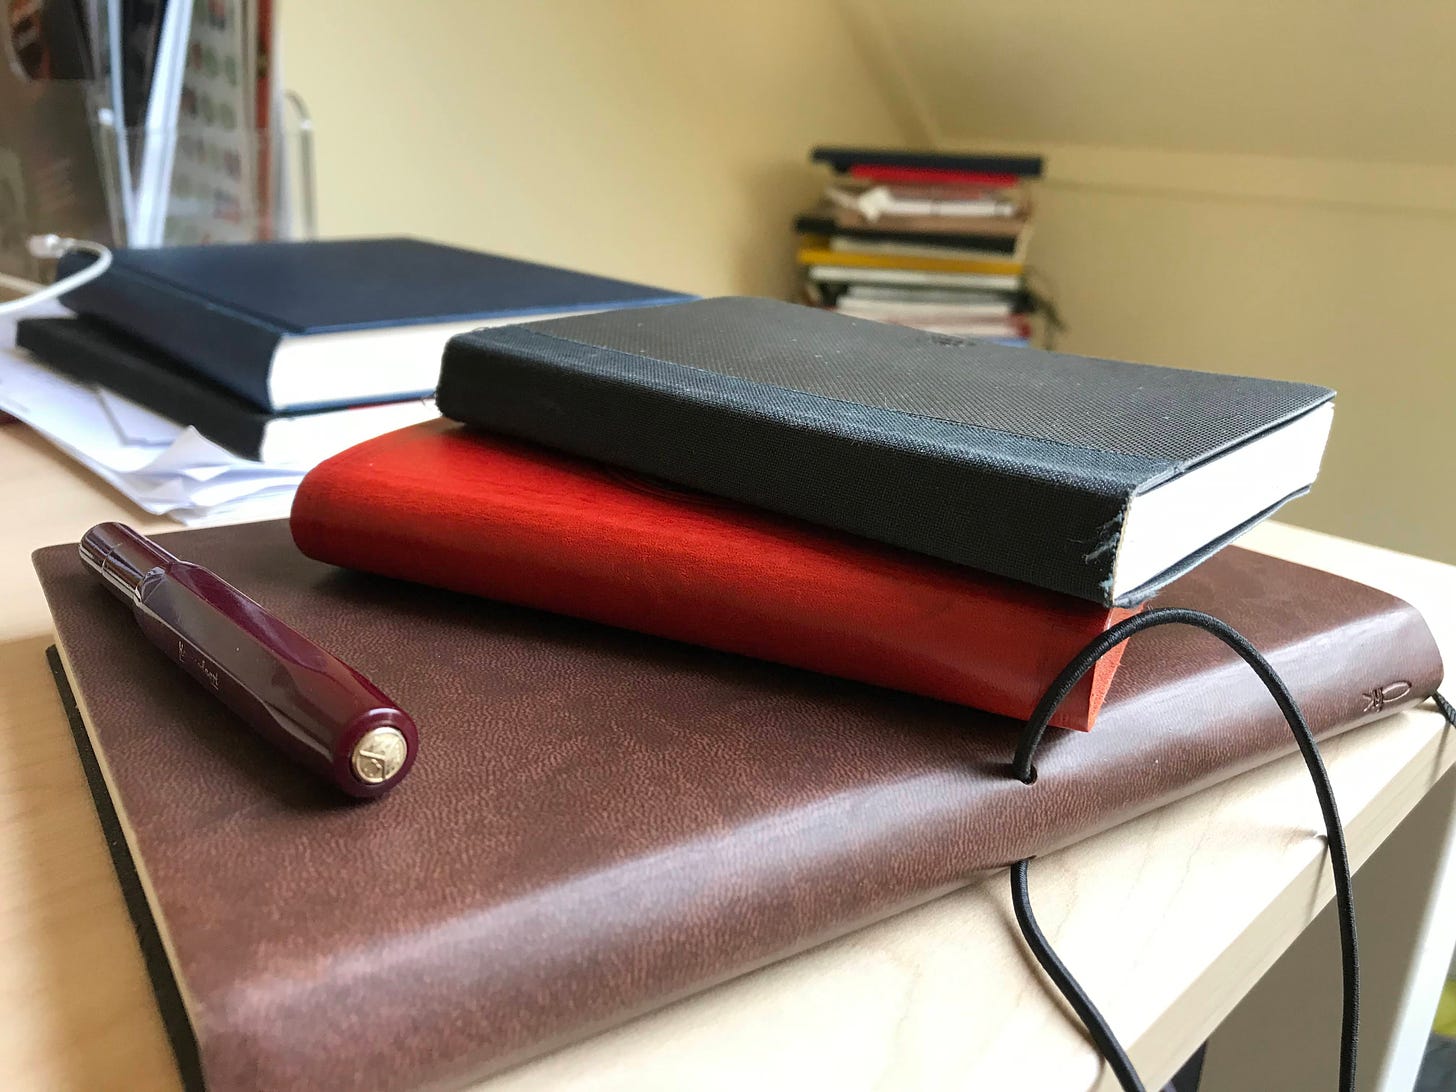 notebooks on the desk